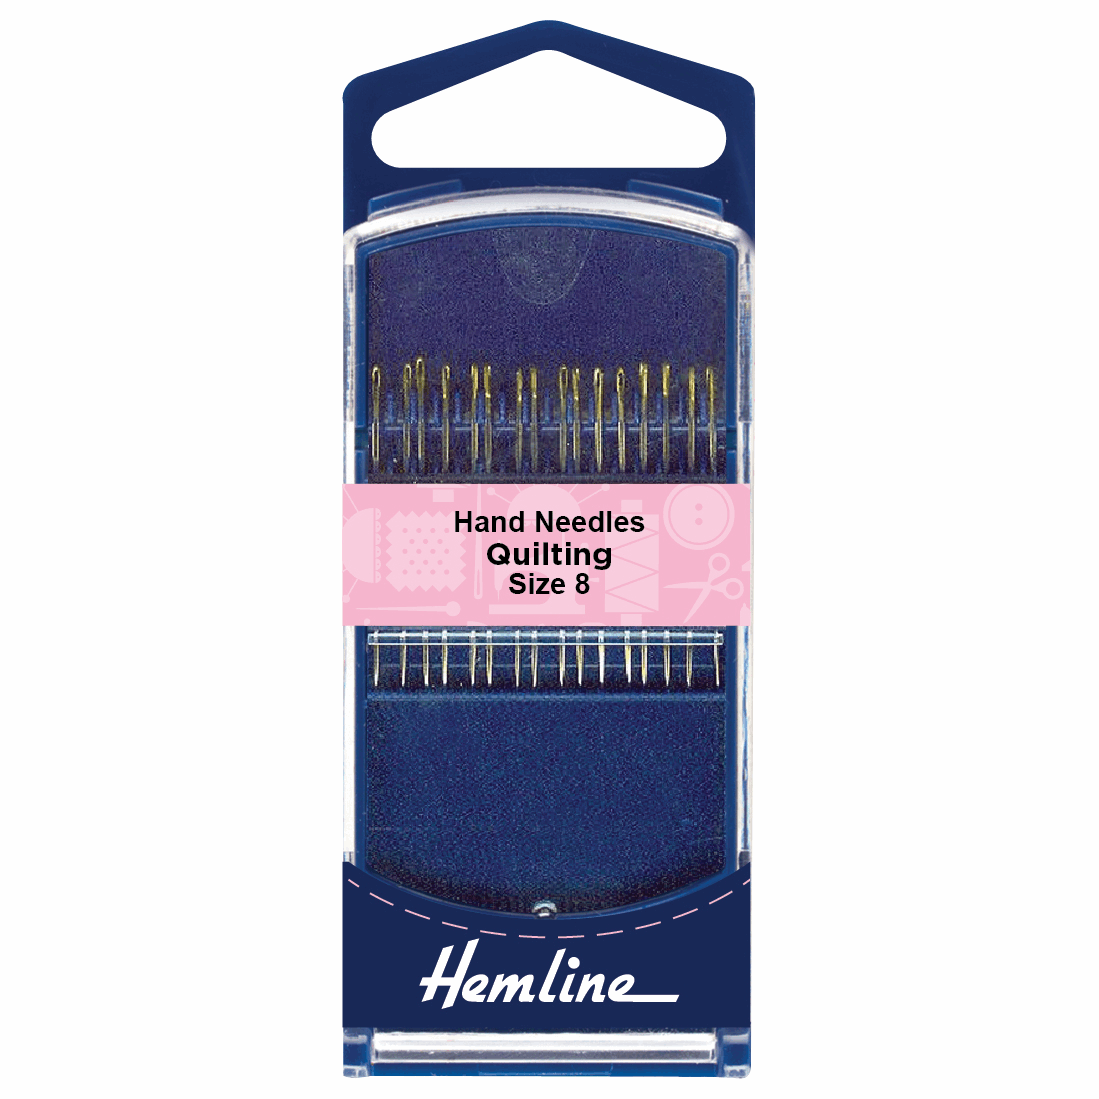 Hemline Premium Hand Quilting Needles - Size 8 (Pack of 16)